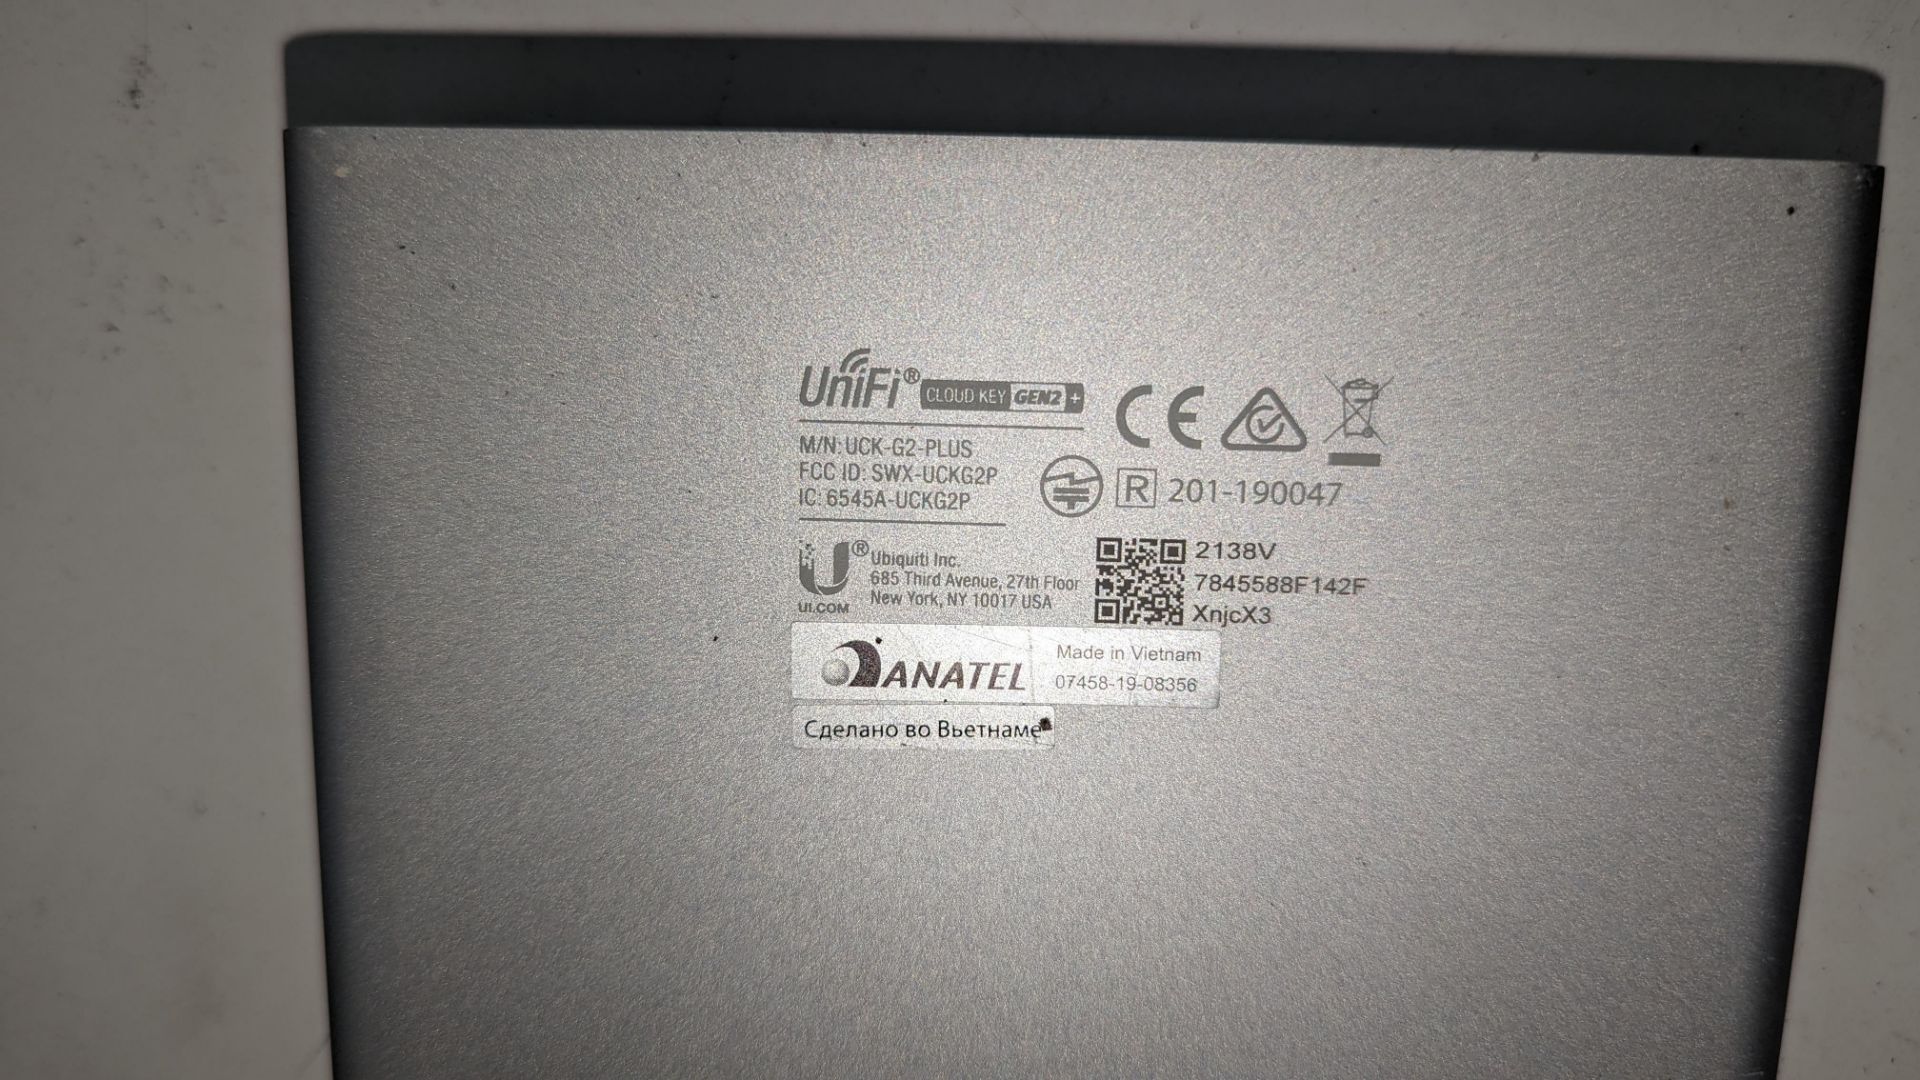 Anatel Unifi Cloud Key Gen 2+ product code UCKG2-PLUS - Image 7 of 7